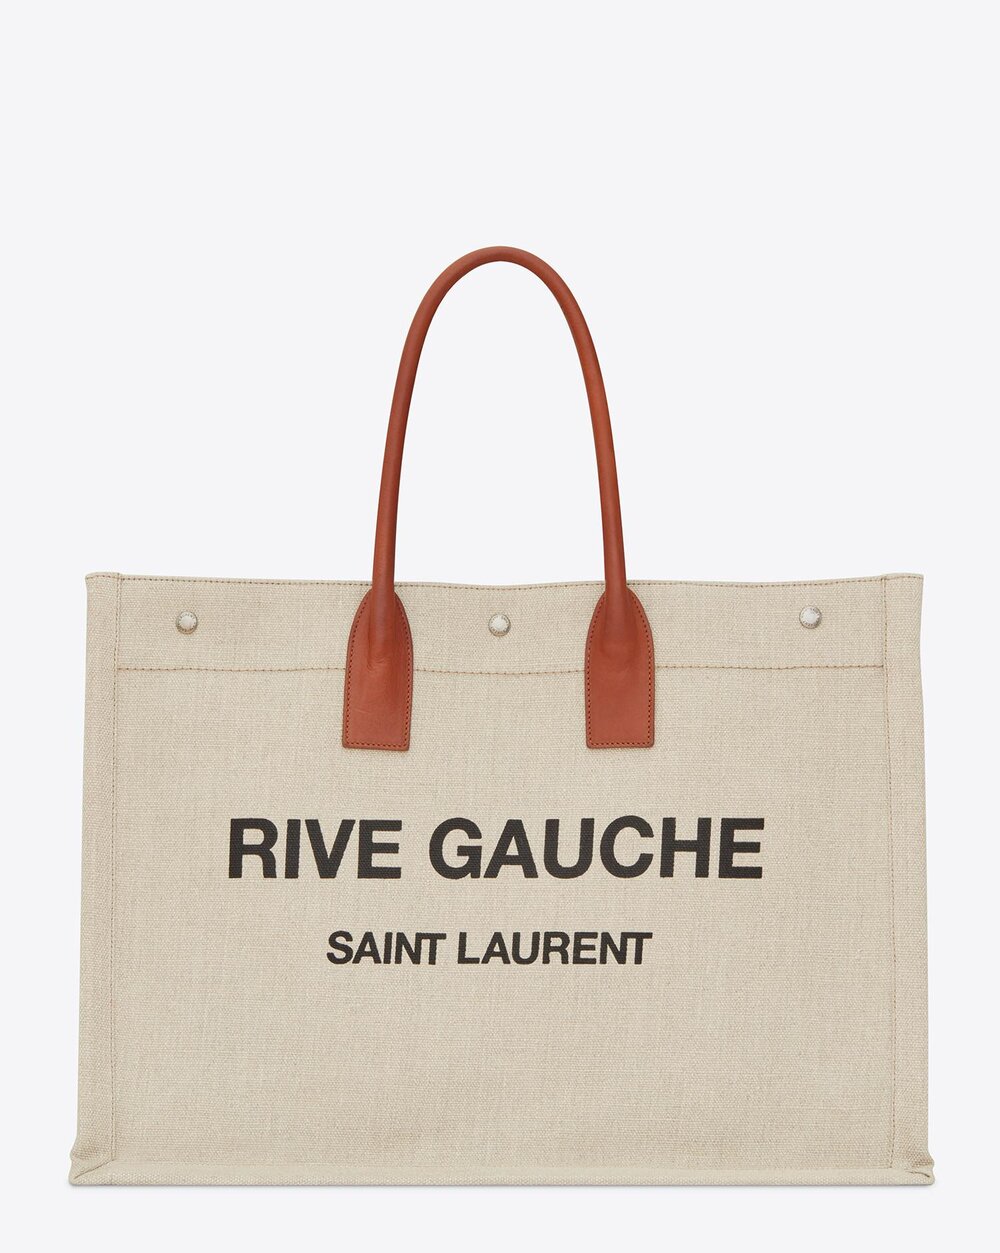 SAINT LAURENT TOTE RIVE GAUCHE BAGS – Baltini